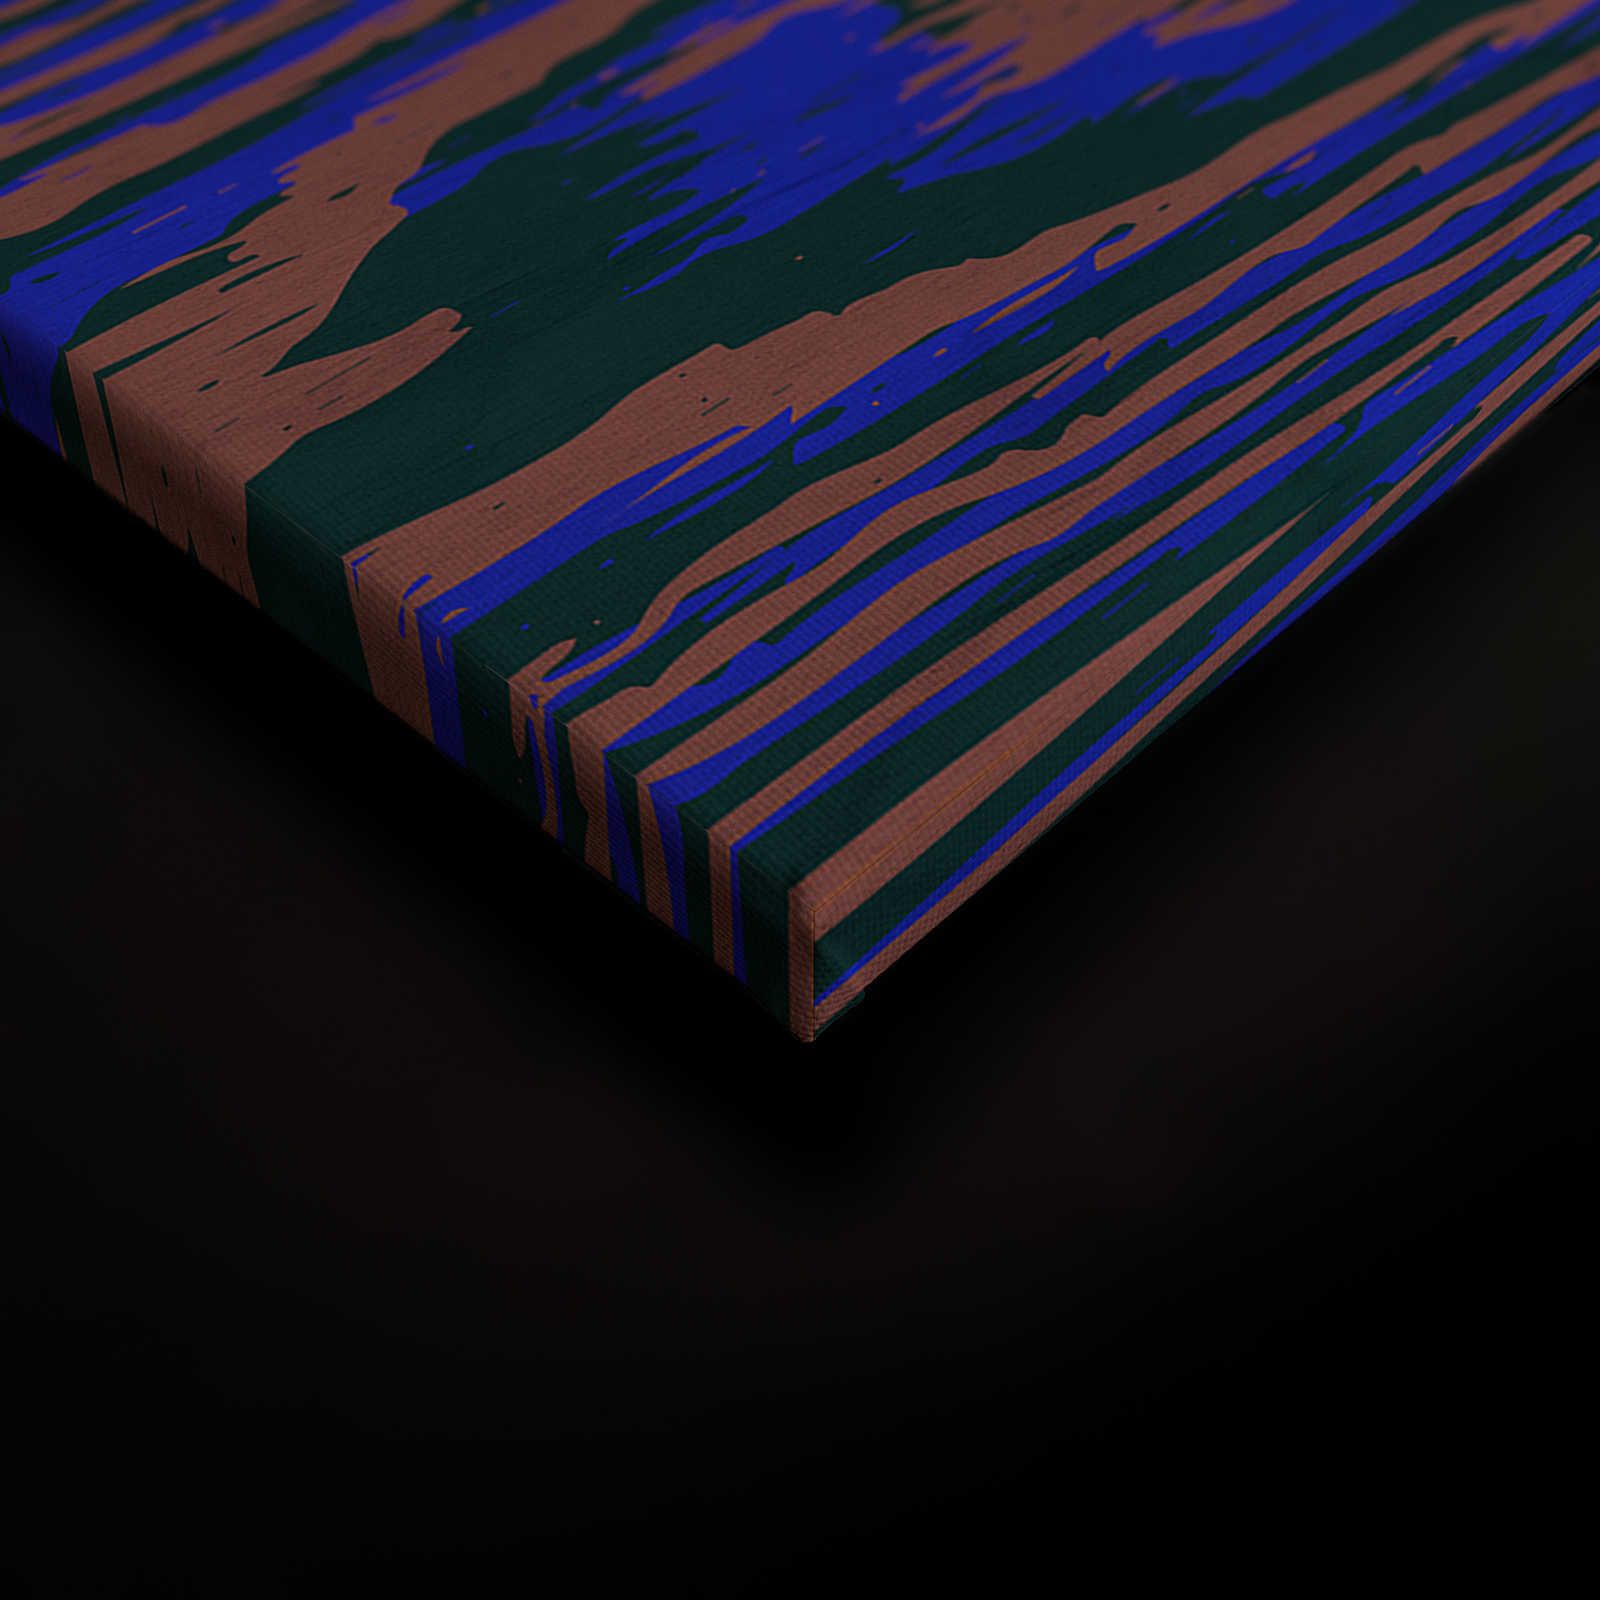             Kontiki 3 - Canvas painting Neon Wood Grain, Purple & Black - 0.90 m x 0.60 m
        